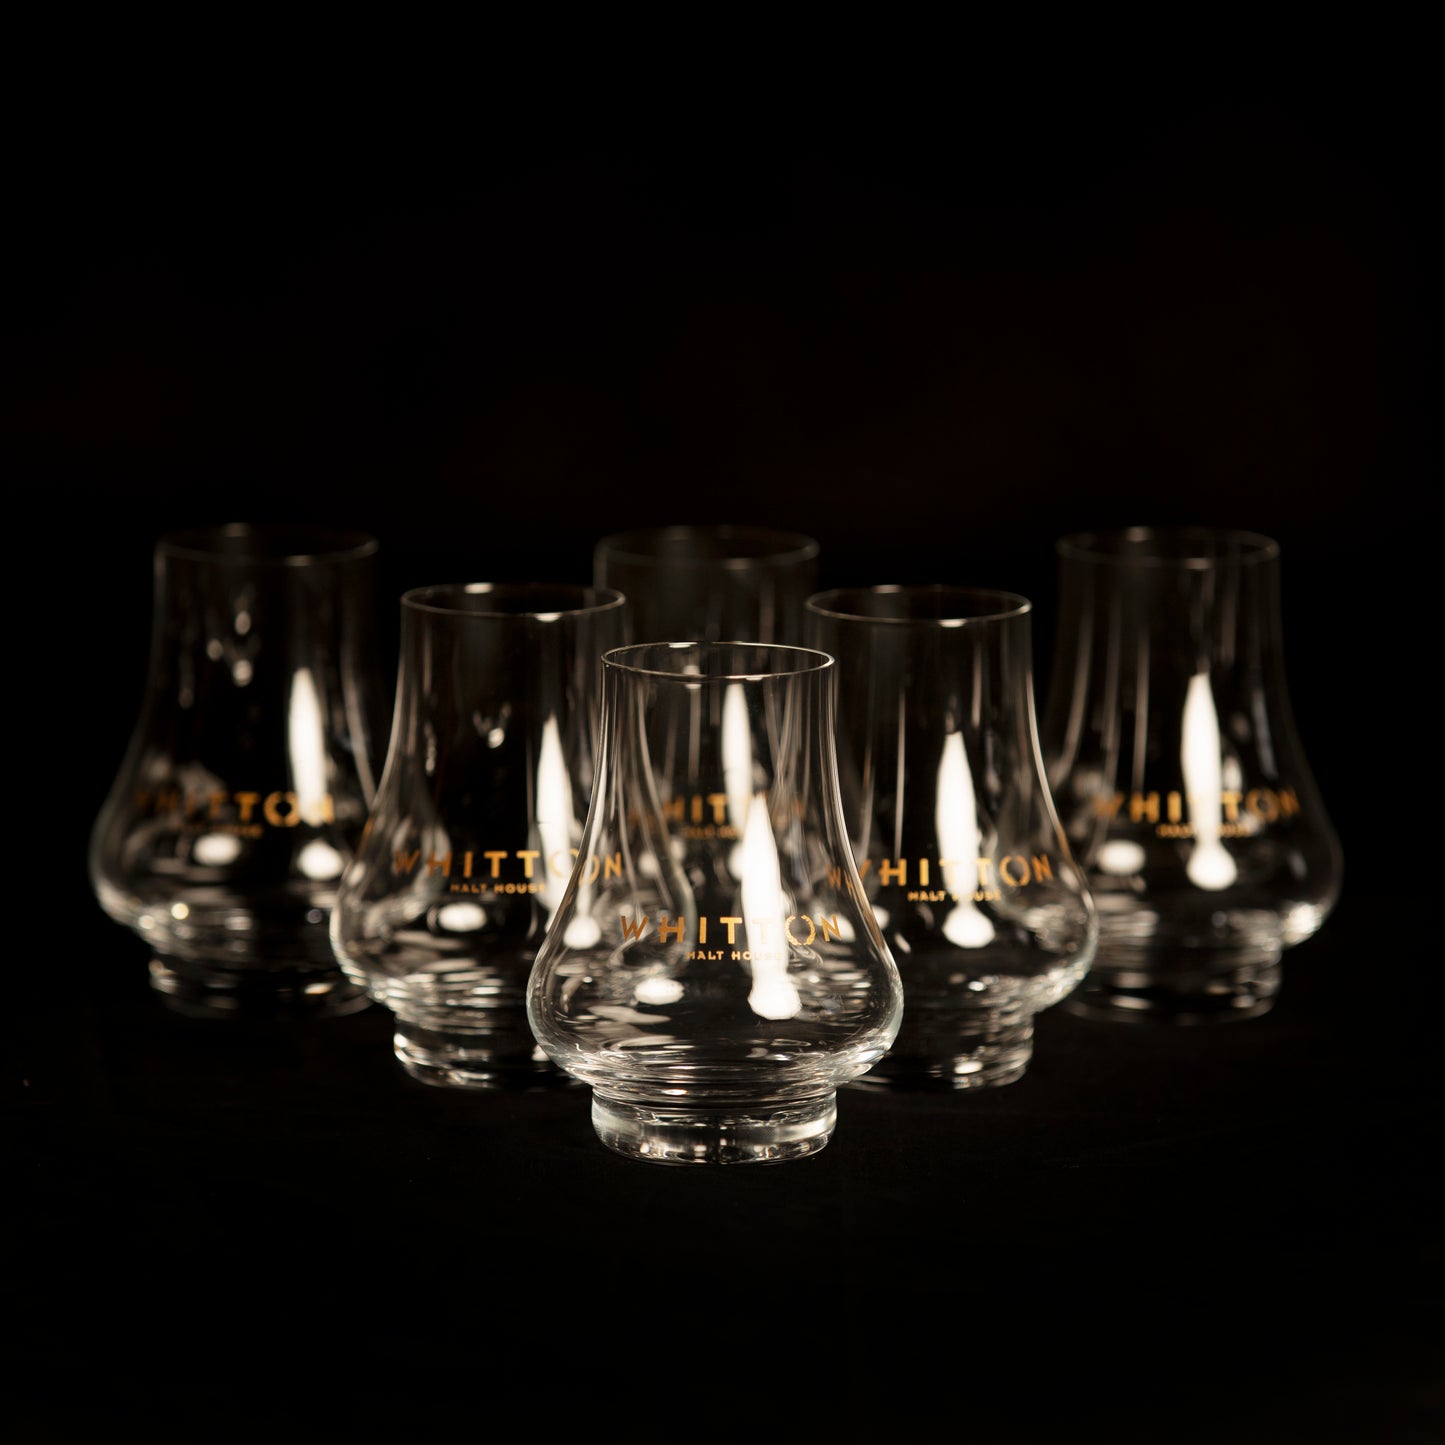 WMH Gold Whisky Glasses - Set of 6